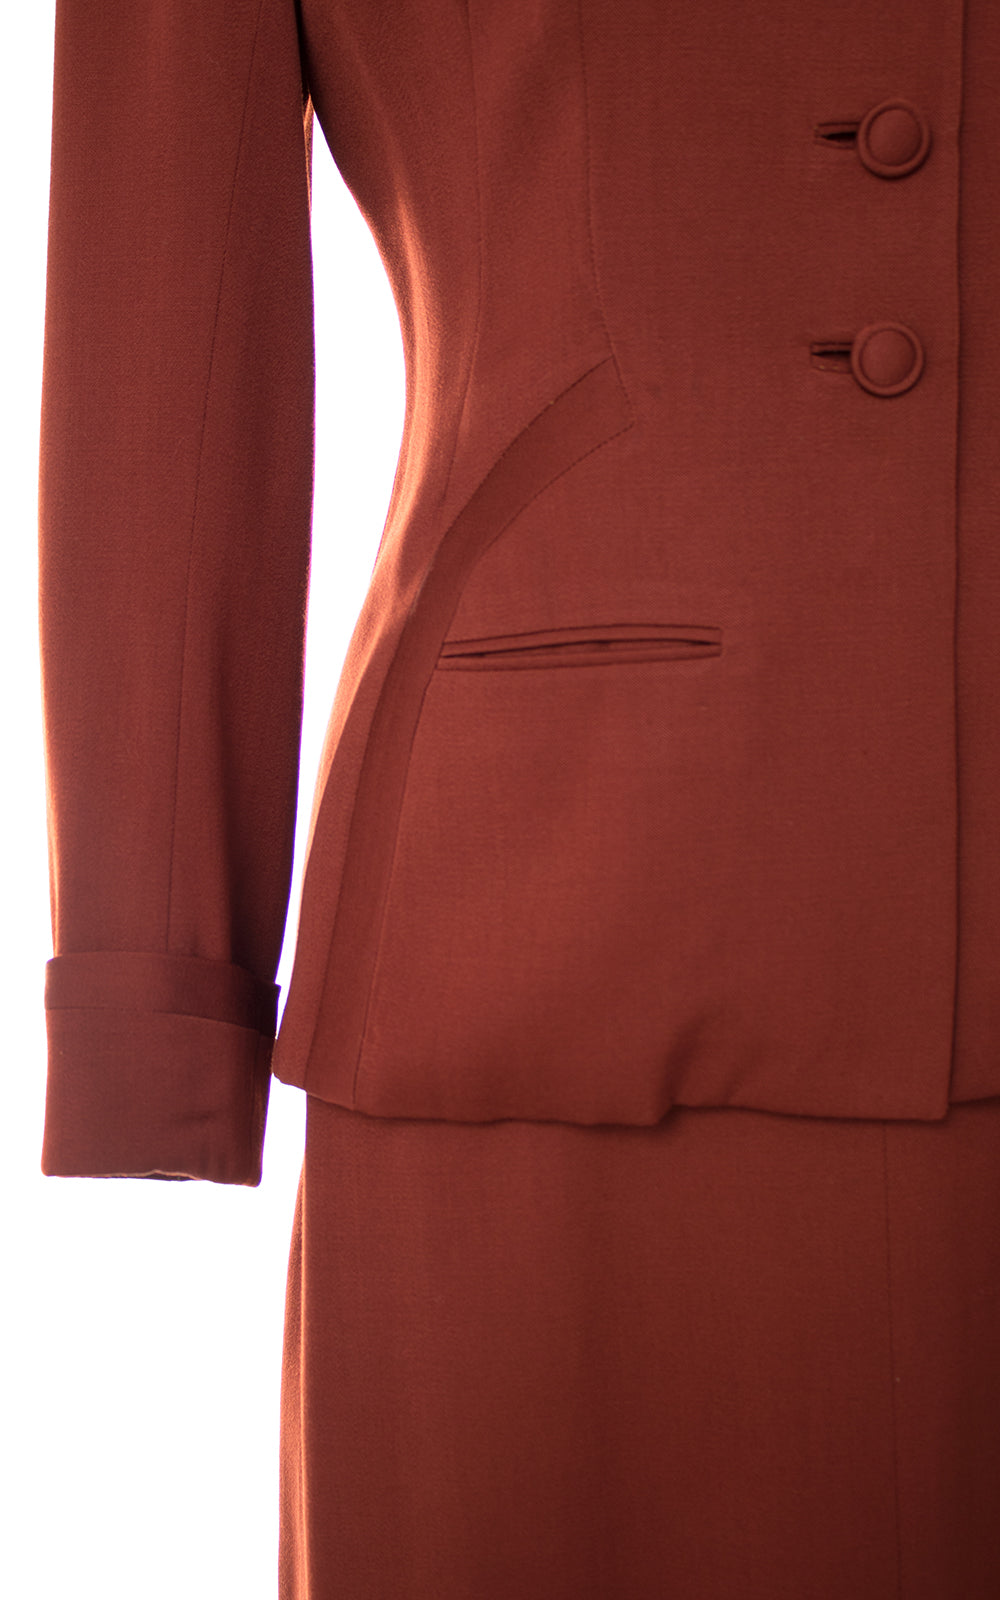 1940s Rust Orange Wool Gabardine Skirt Suit